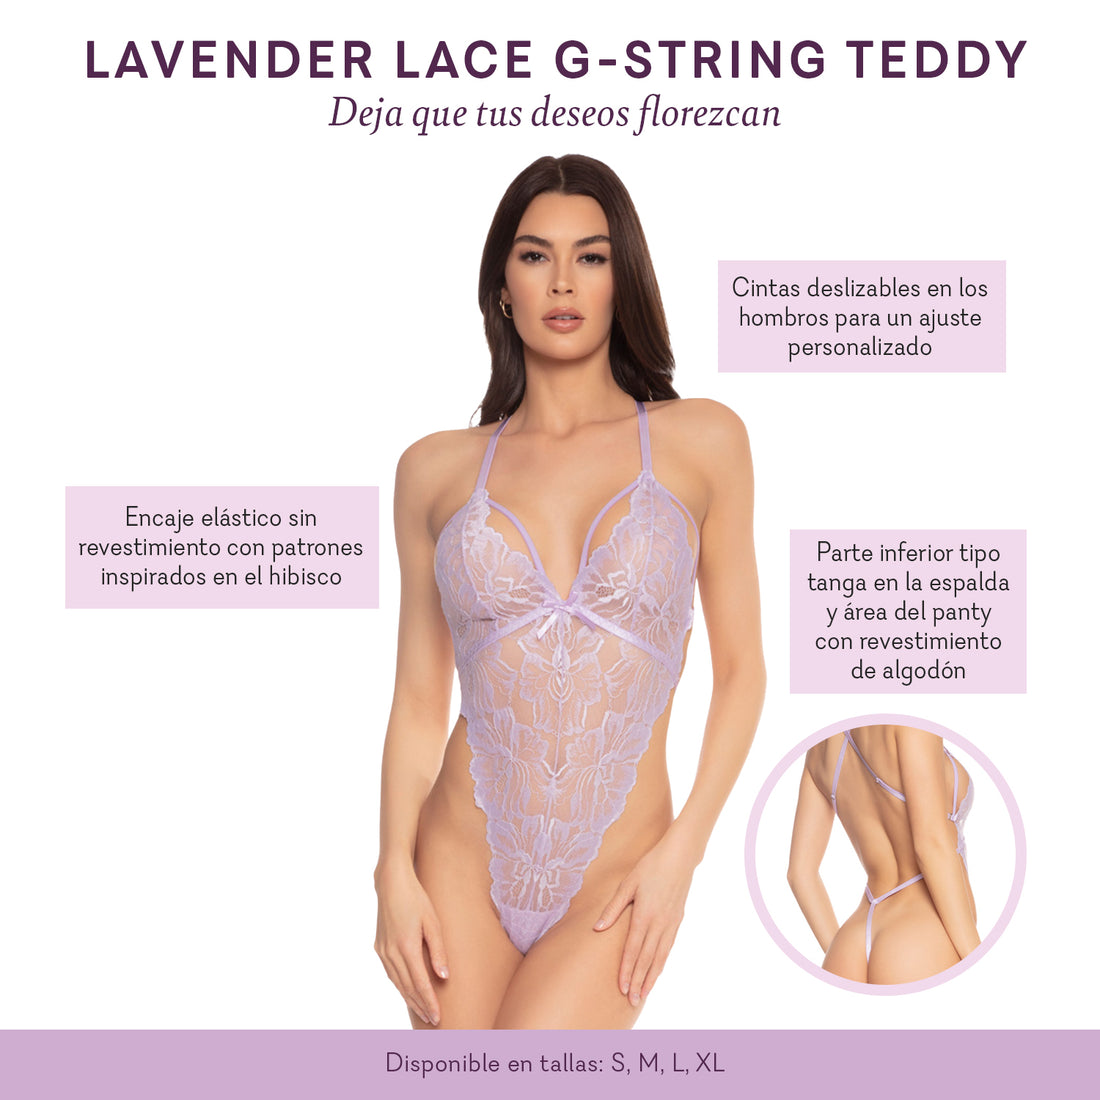 Lavender Lace G-string Teddy